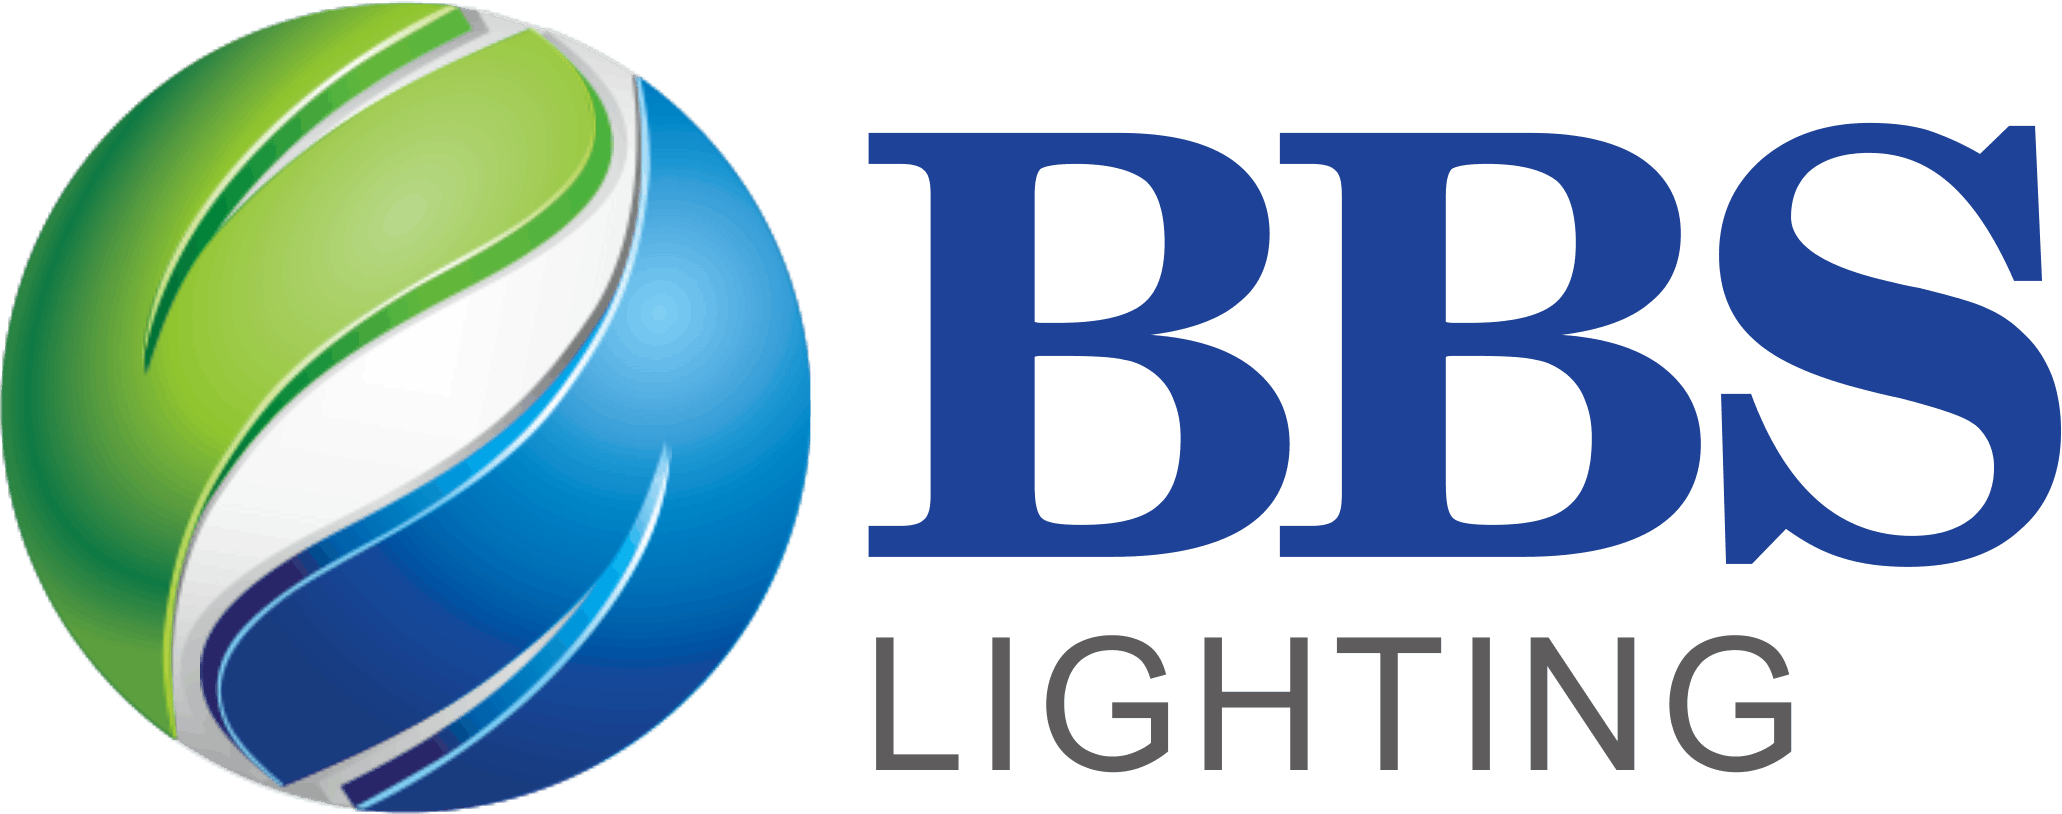 Zhongshan BBS Lighting Technology Co.,Ltd.